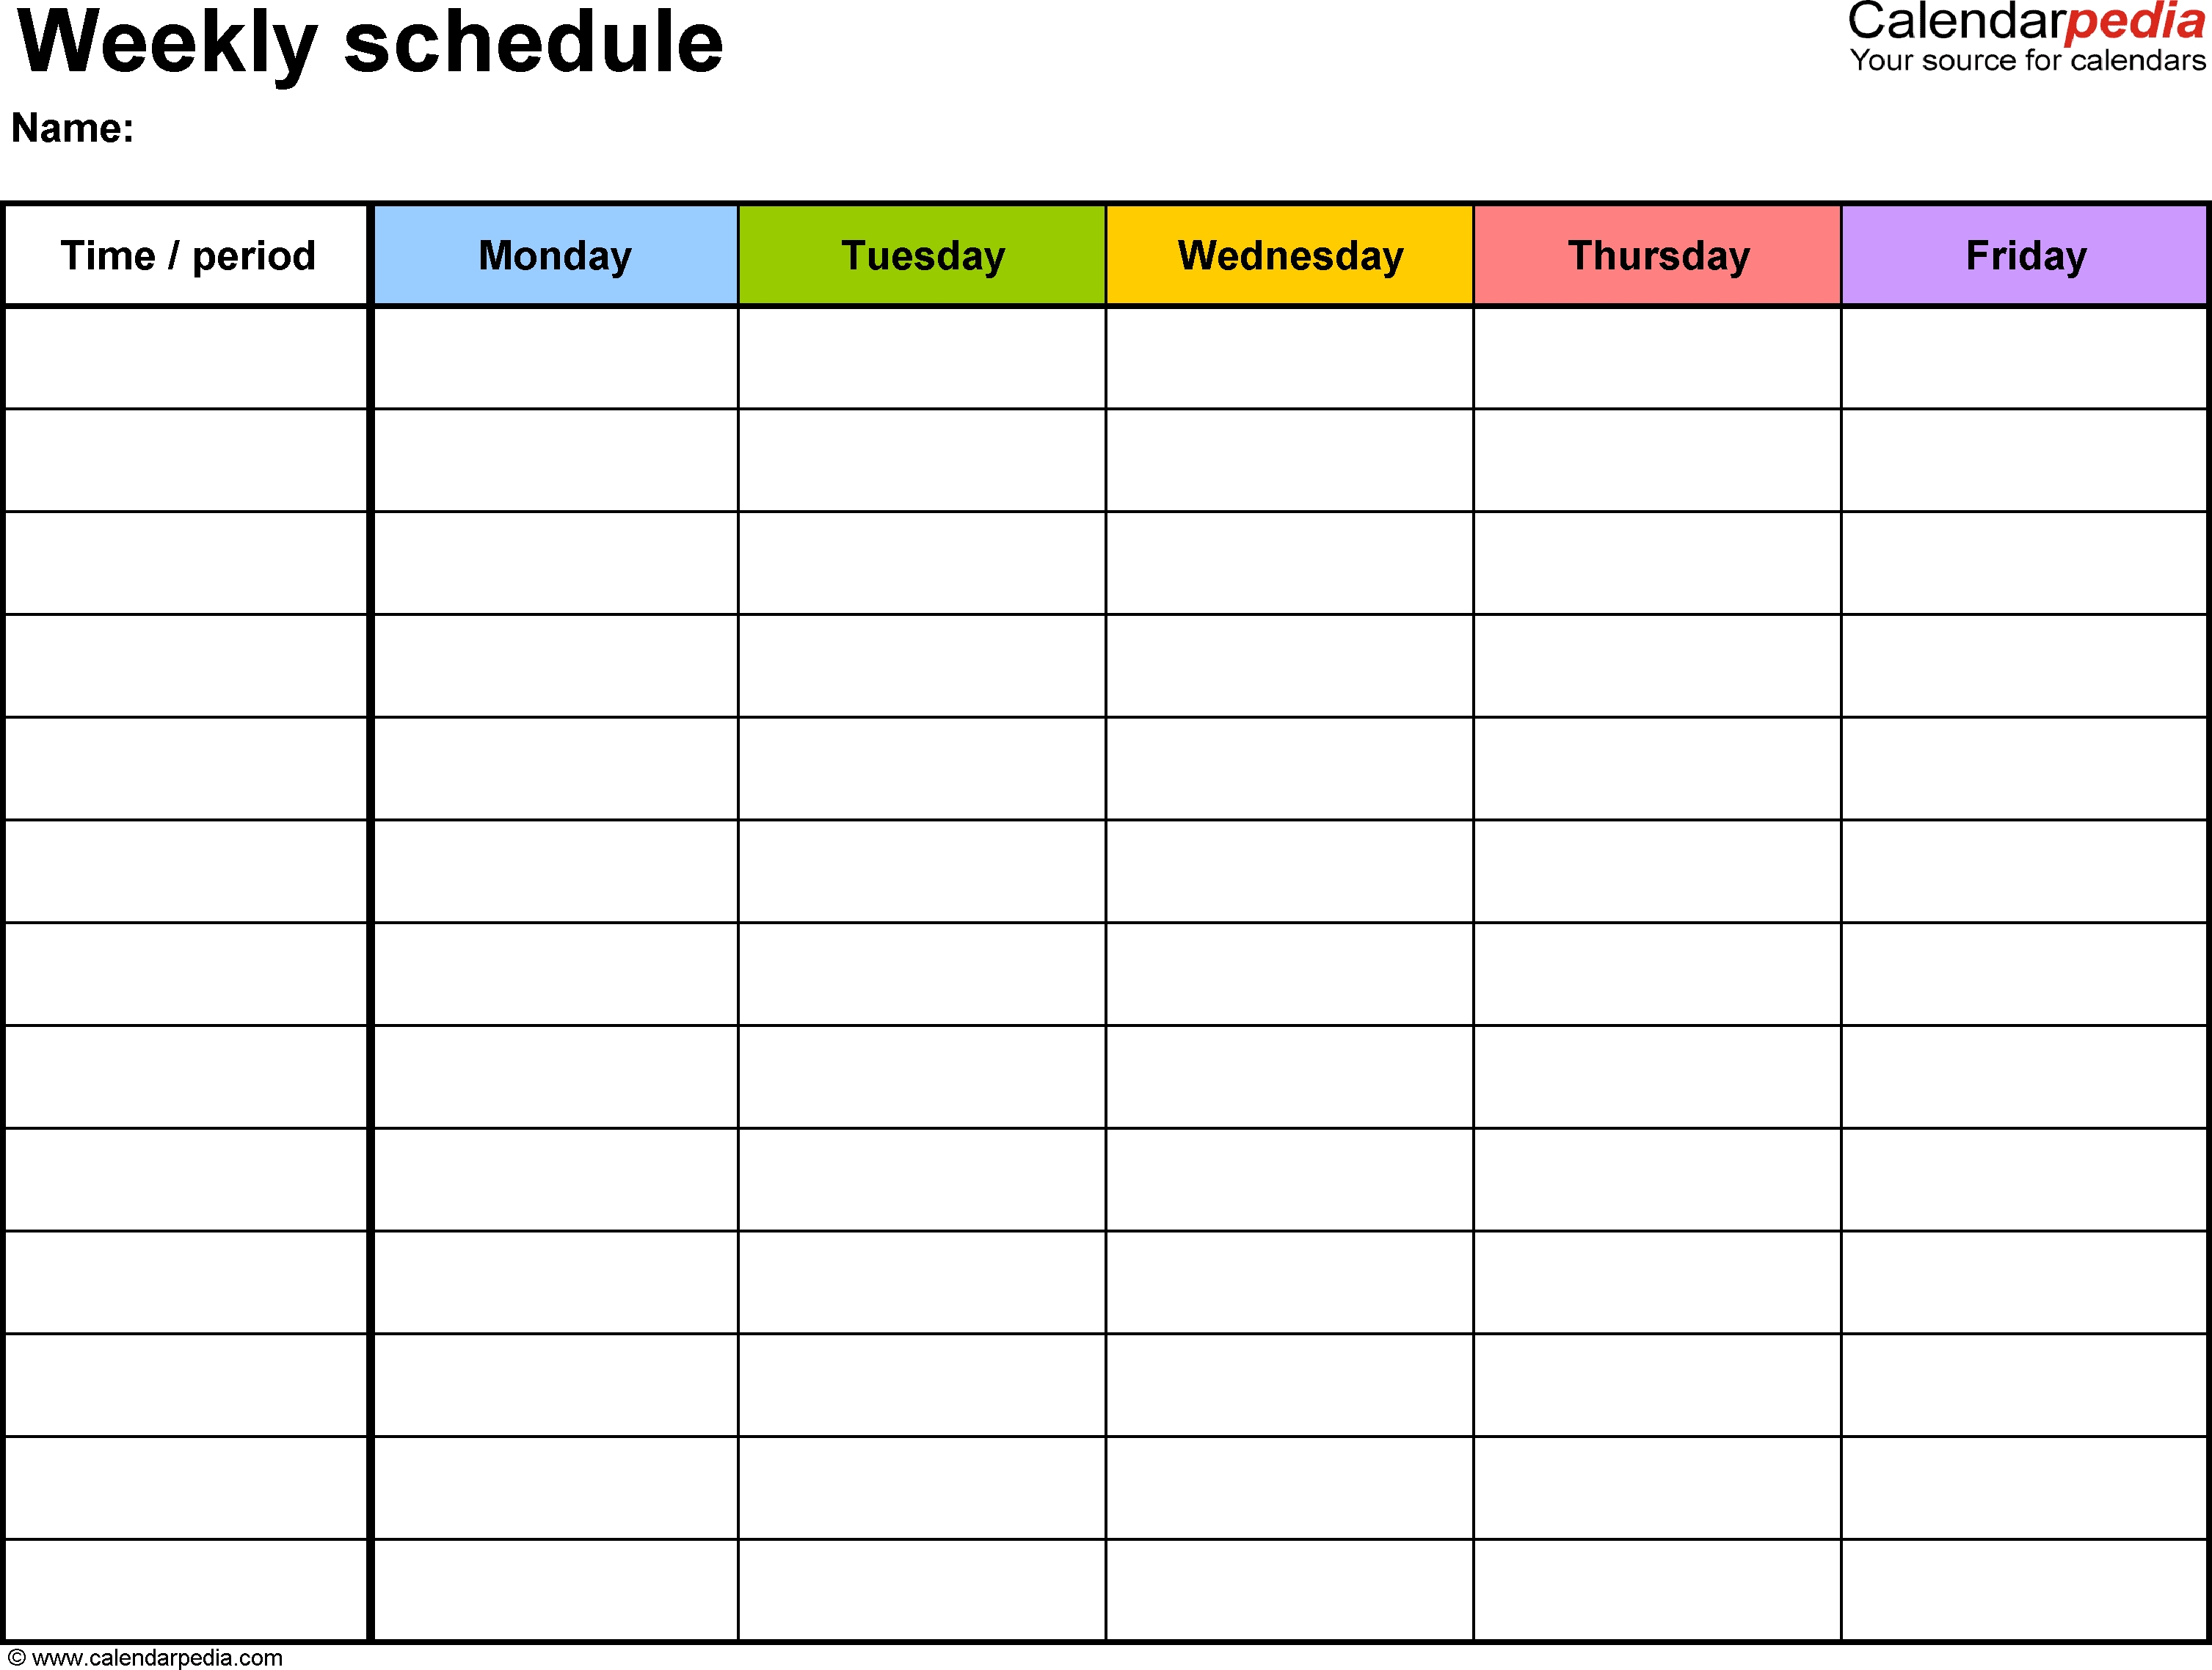 Weekly Schedule Template For Word Version 1: Landscape, 1 1 Week Calendar Template Word